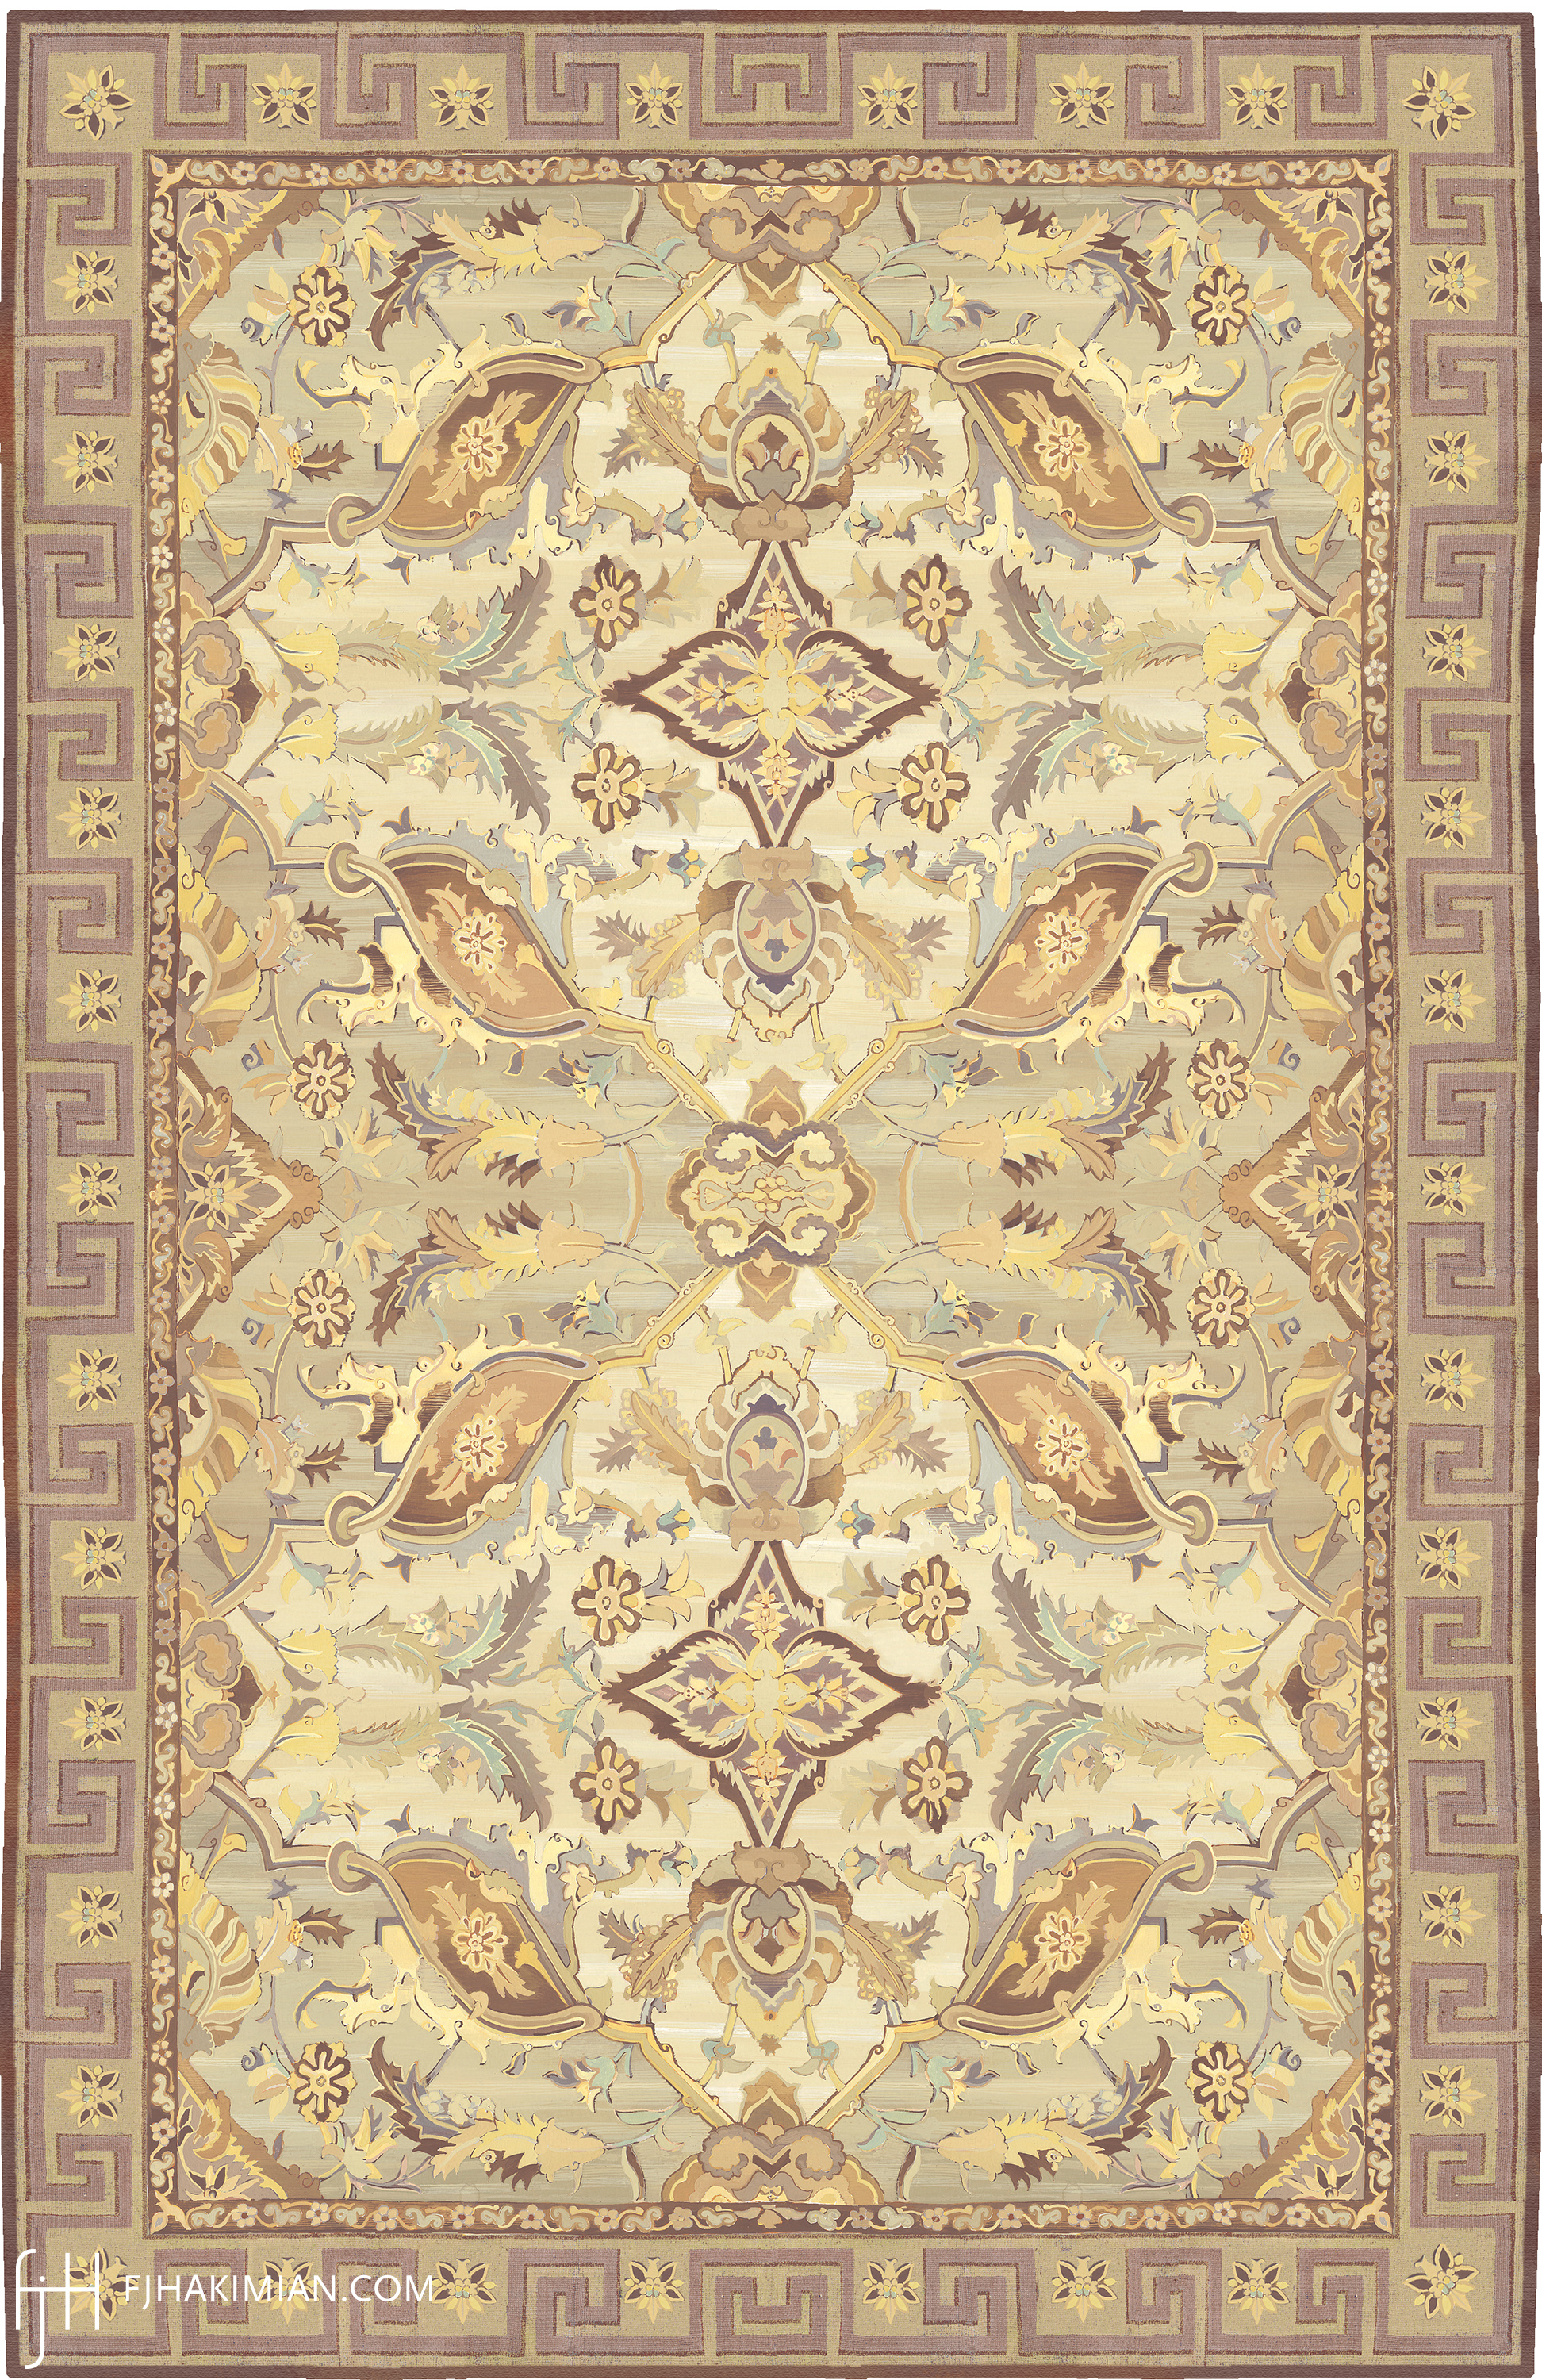 16770 | Ariel Design | Custom Traditional Design Carpet | FJ Hakimian | Carpet Gallery in NYC